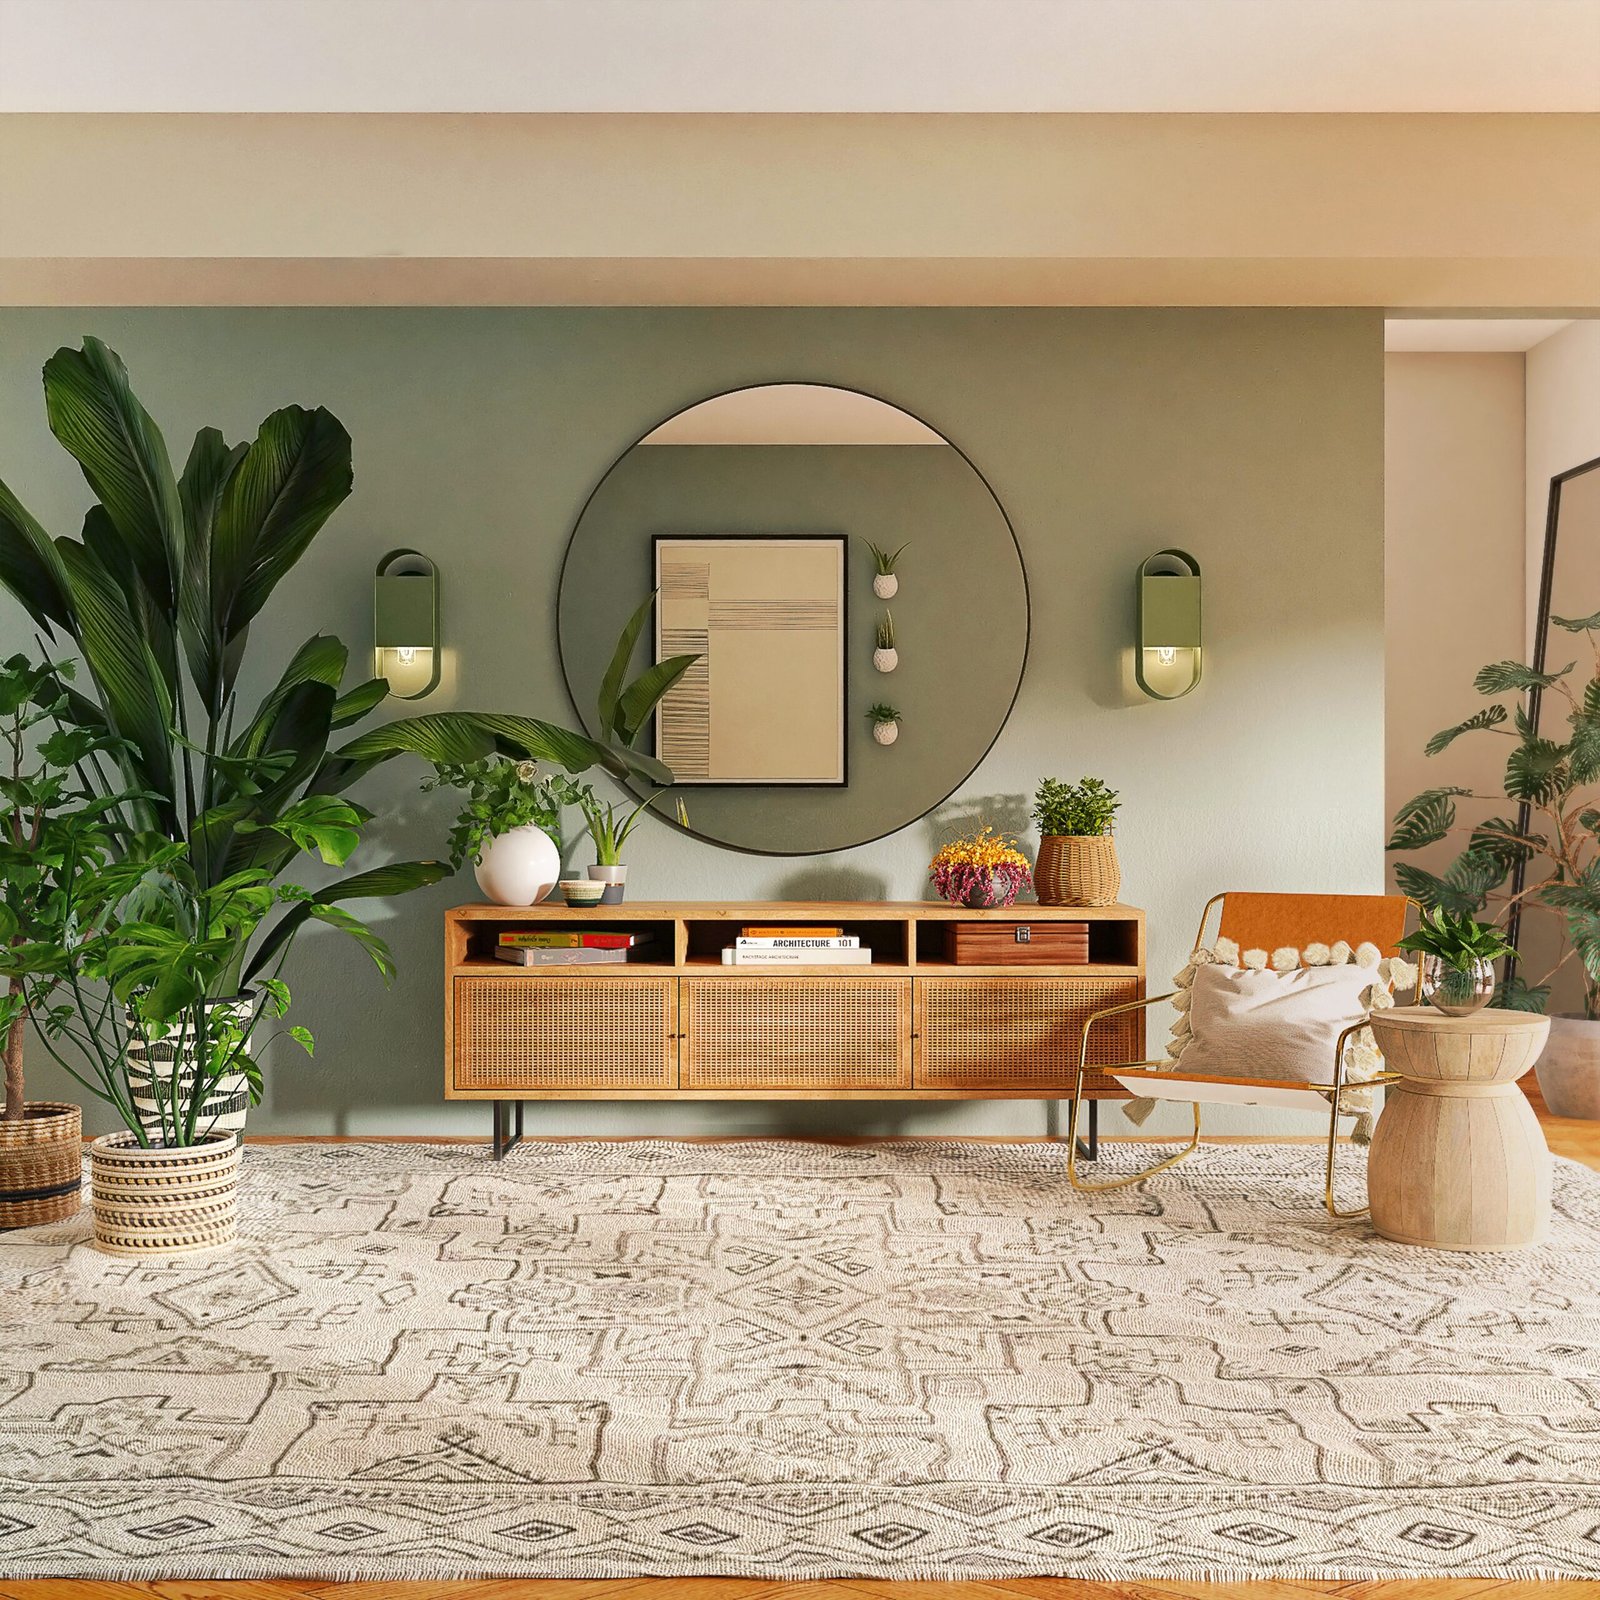 10 Home Decor Ideas to Transform Your Space